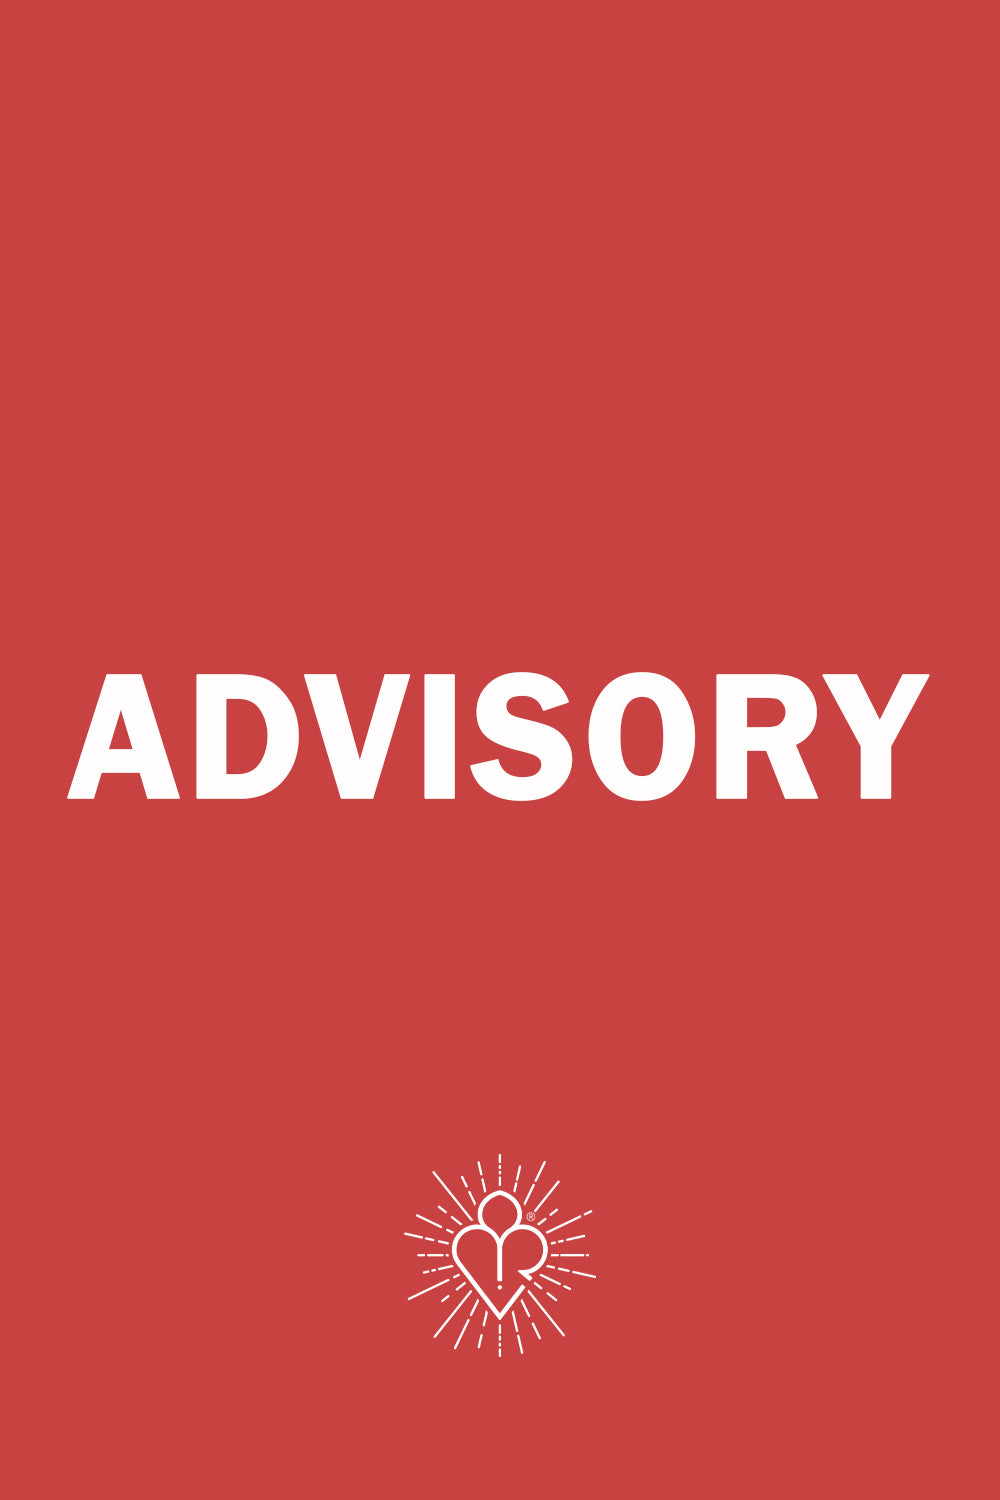 [UPDATED 01.16.22] Typhoon Odette Advisory